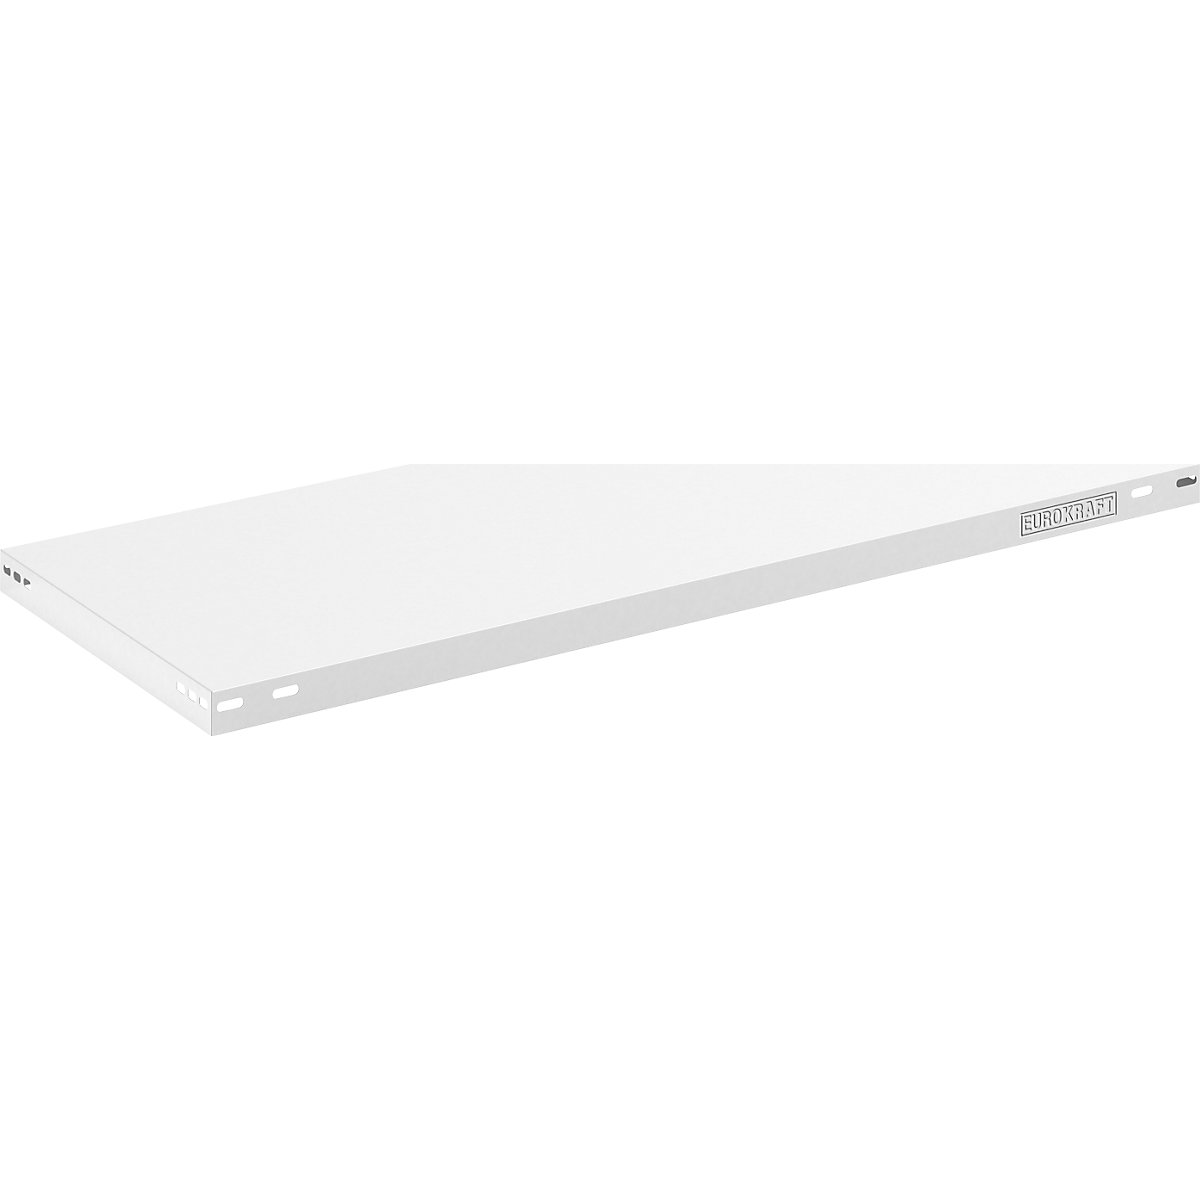 Shelf – eurokraft pro, light grey, medium duty, WxD 1000 x 500 mm